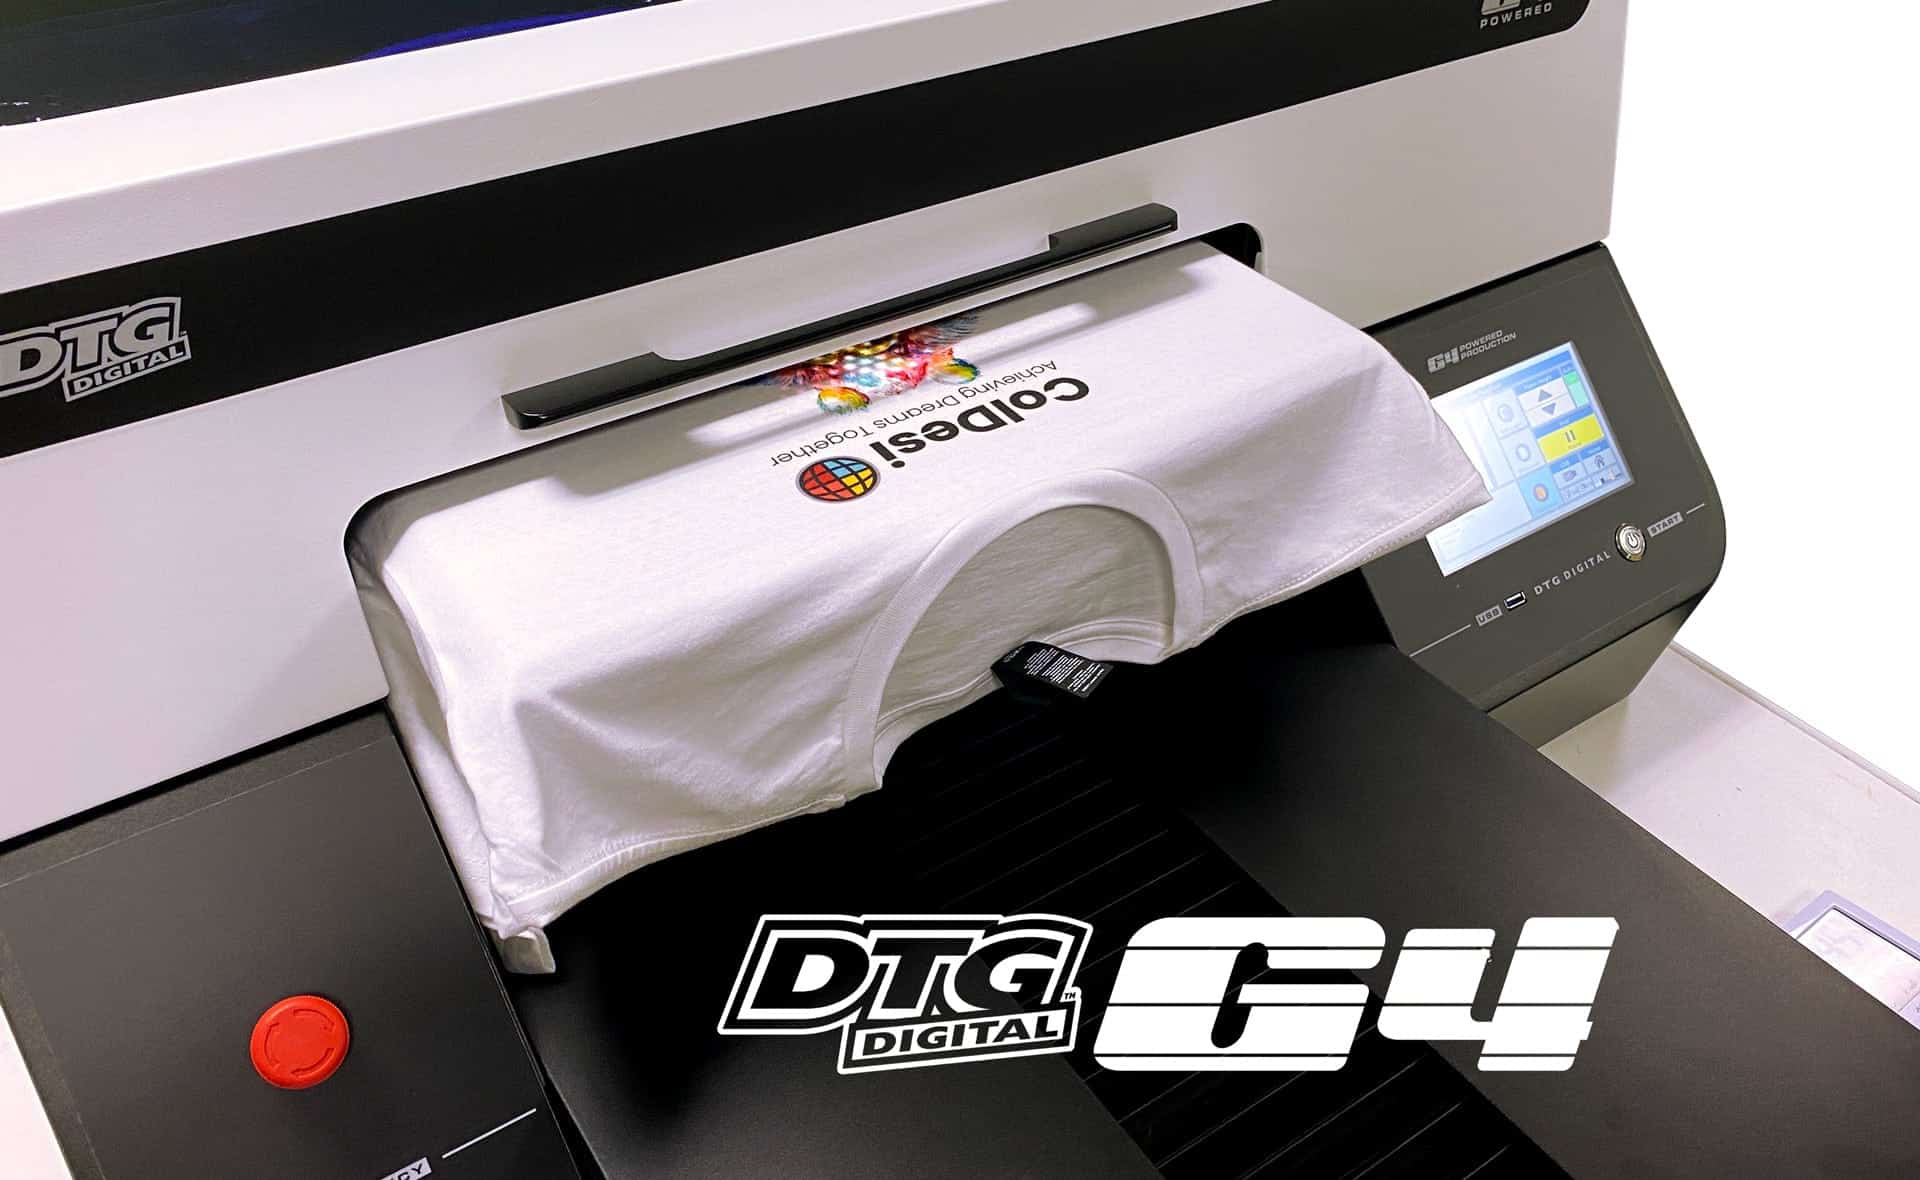 A2 size tshirt printing machine/garment textile printer/direct to clothing  printer_OKCHEM